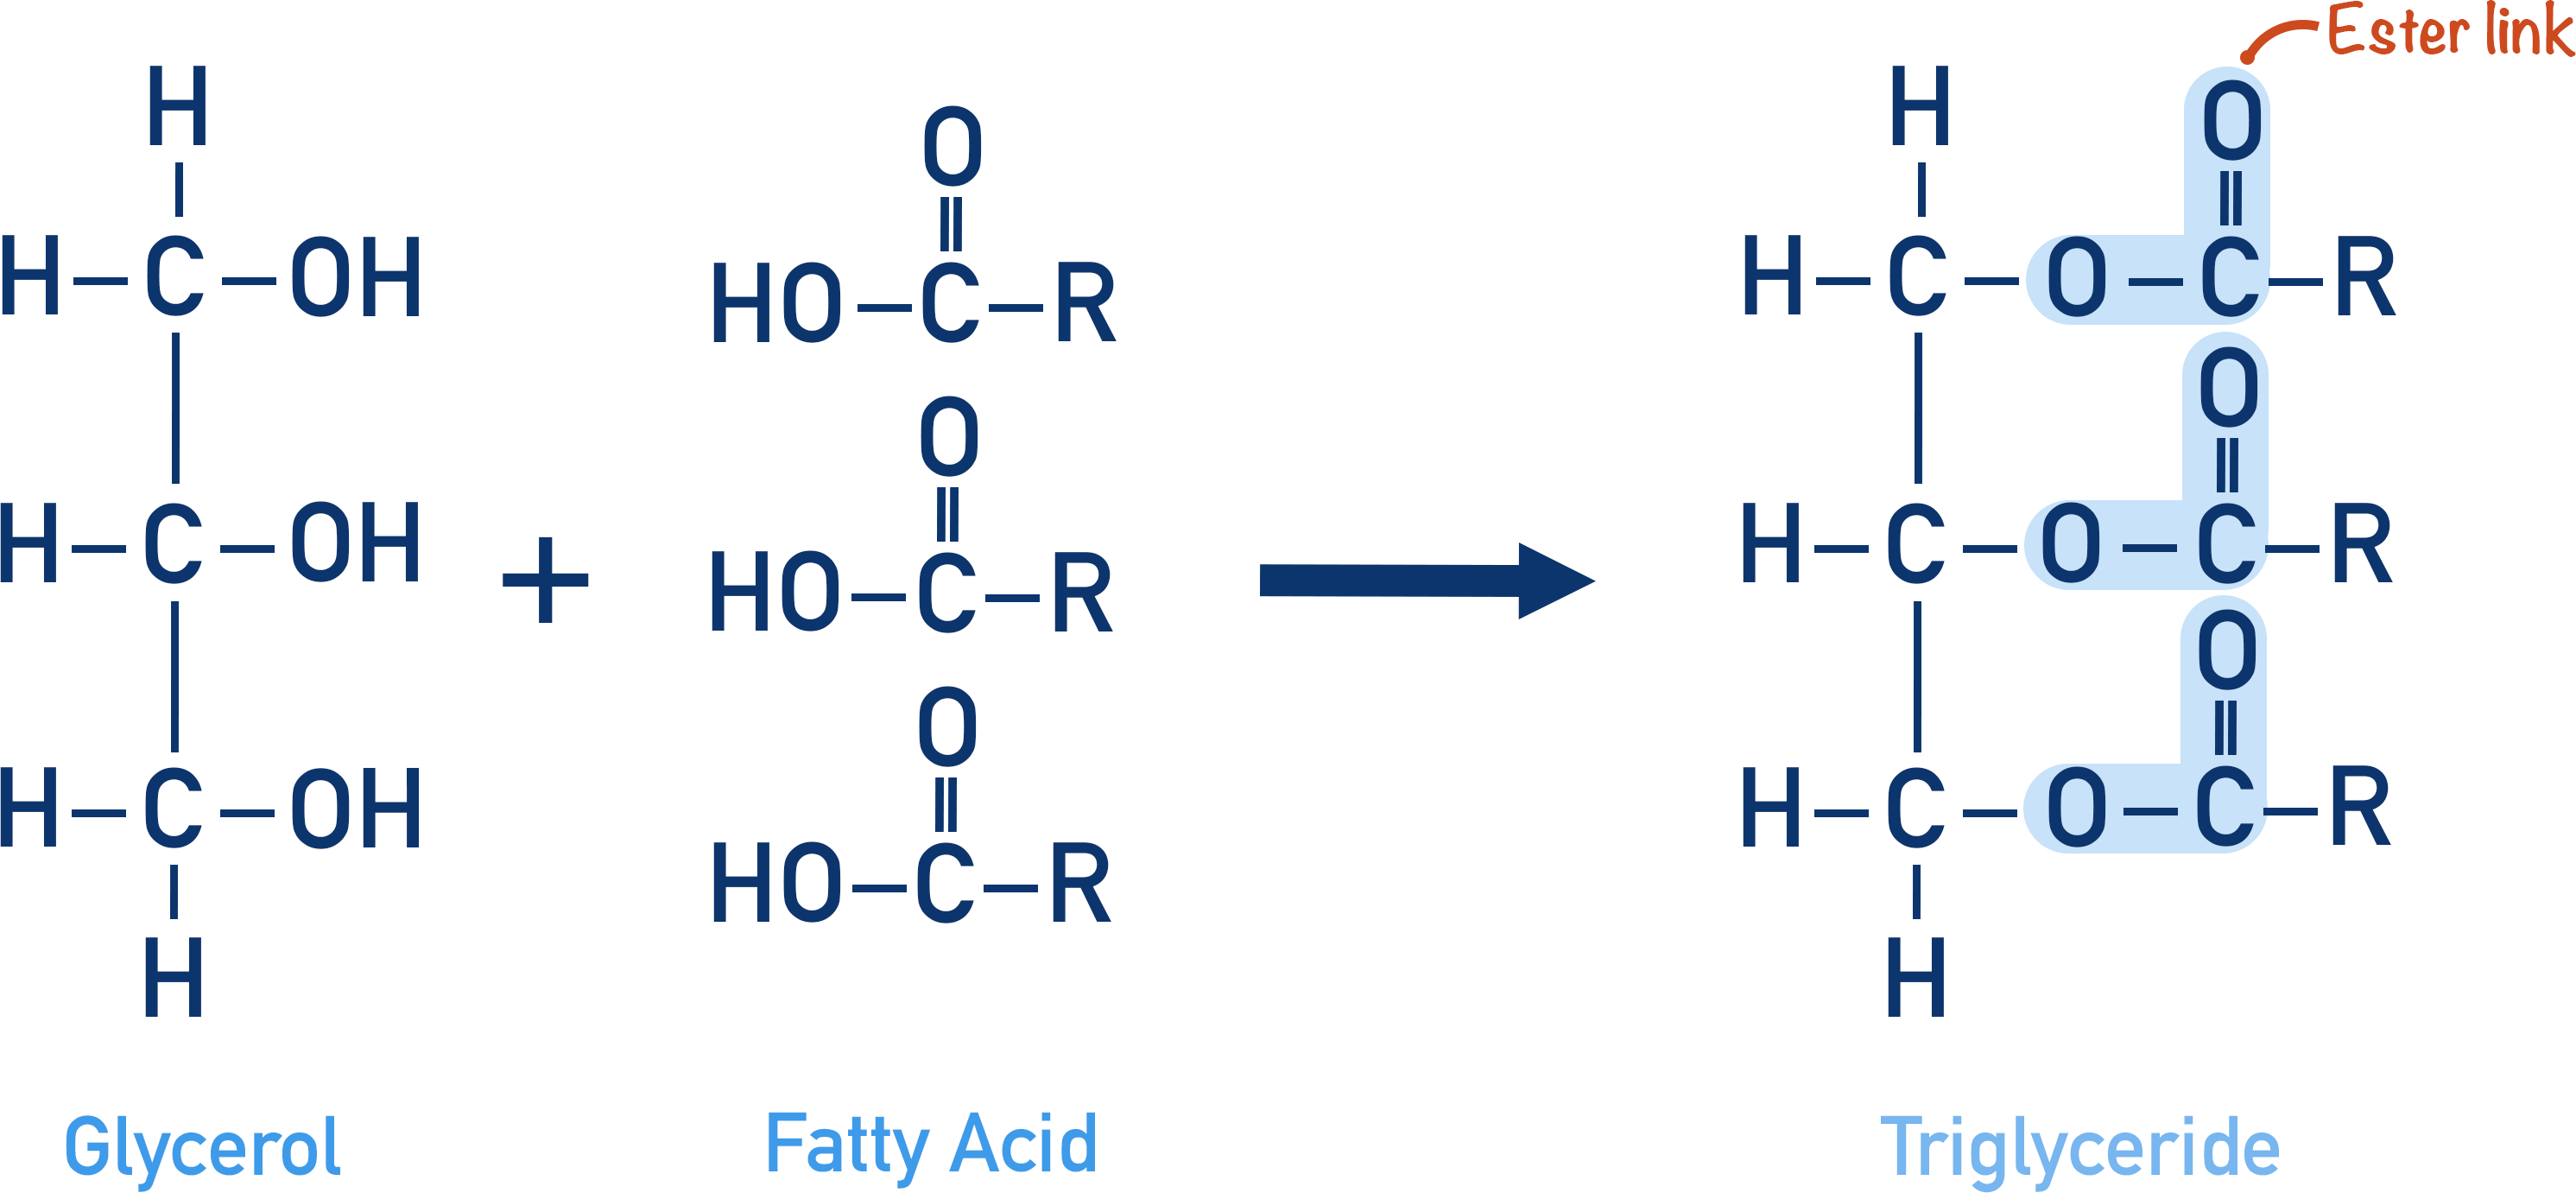 fatty acid and glycerol to form triglyceride